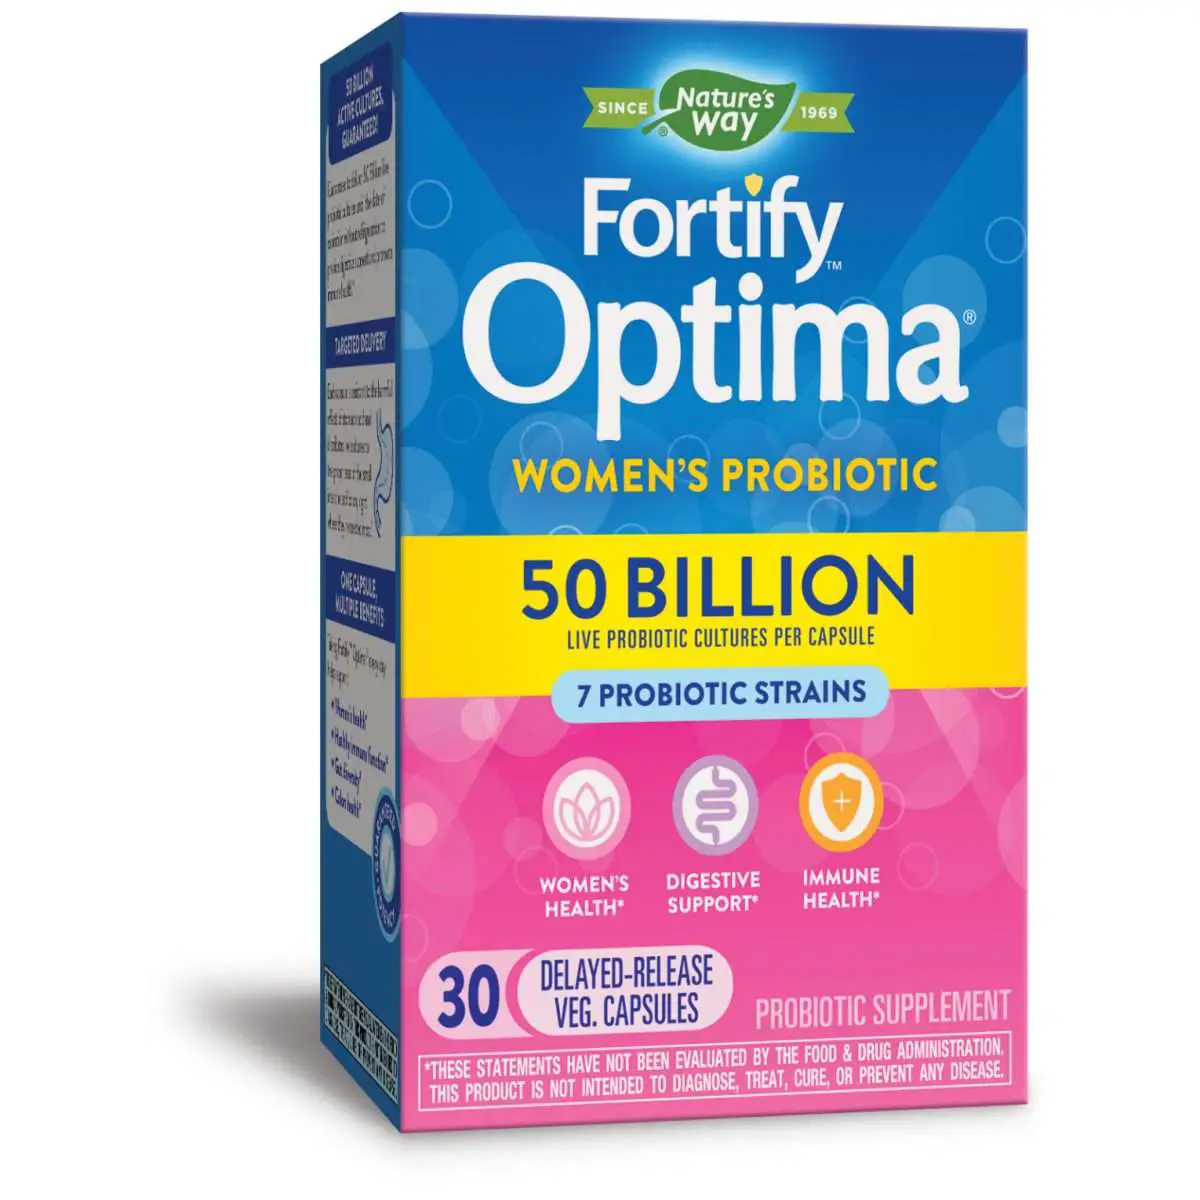 Fortify Optima® Women